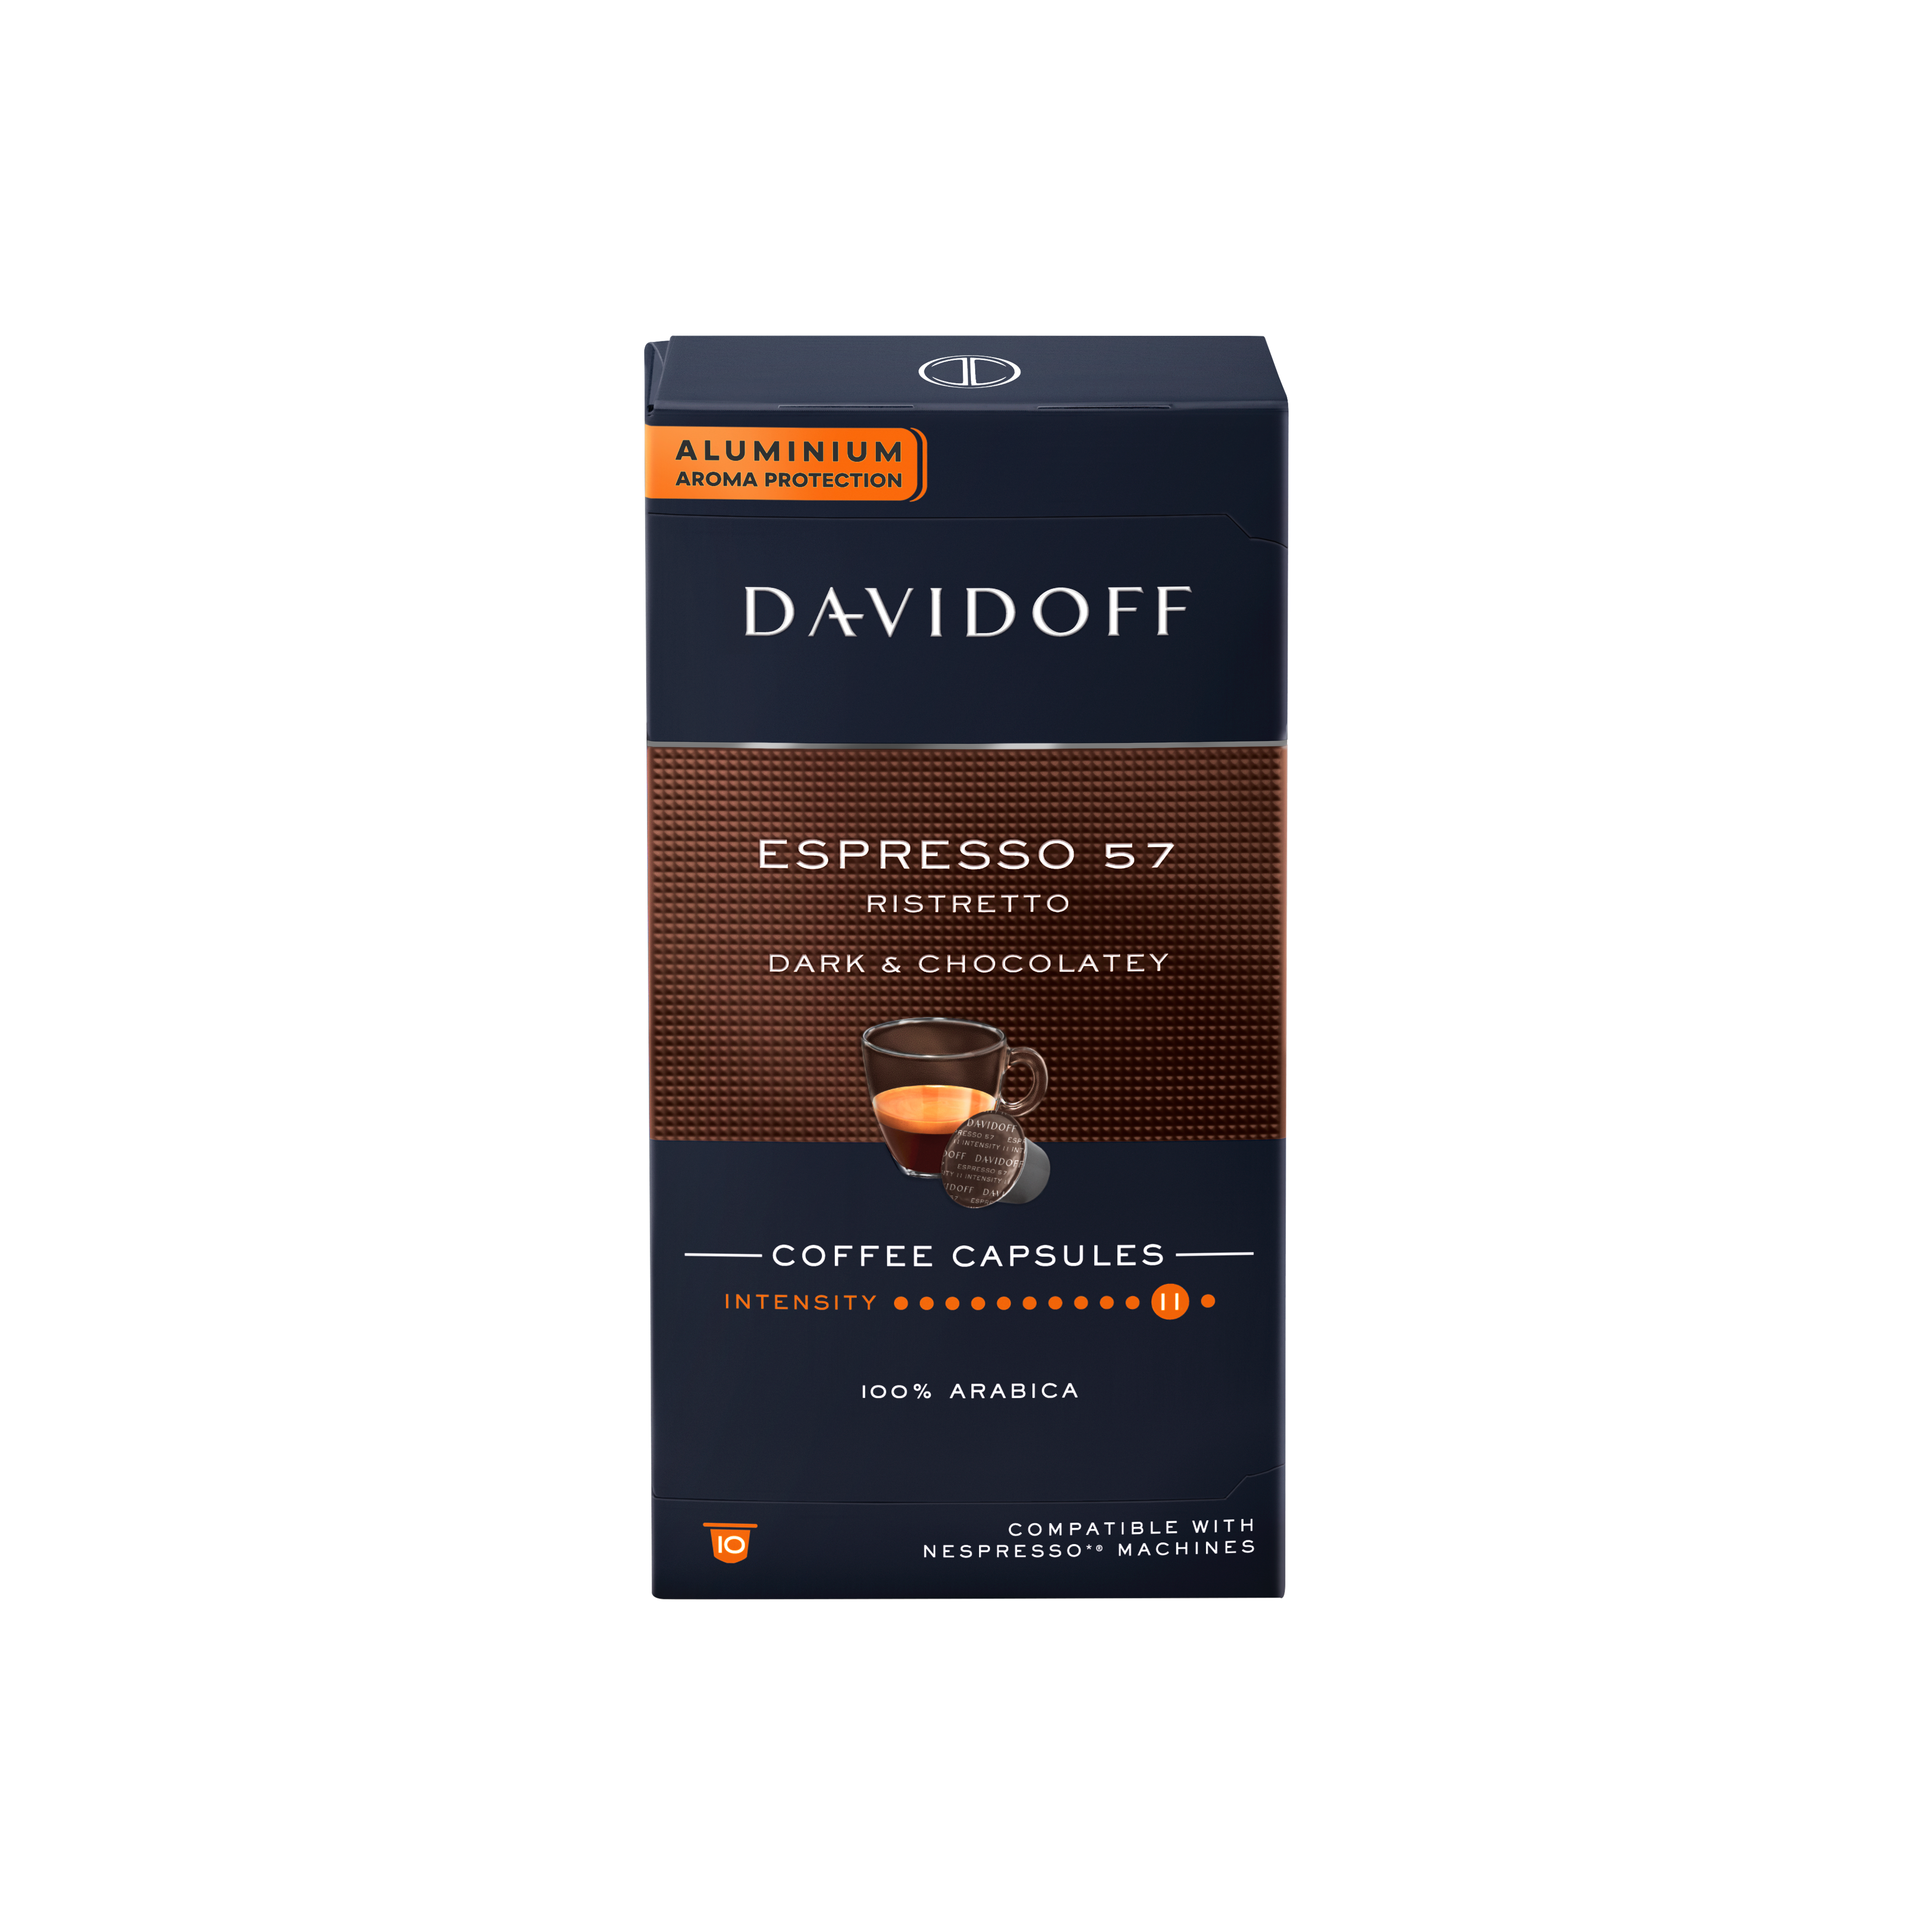 Coffee – Espresso 57 - Instant | DAVIDOFF